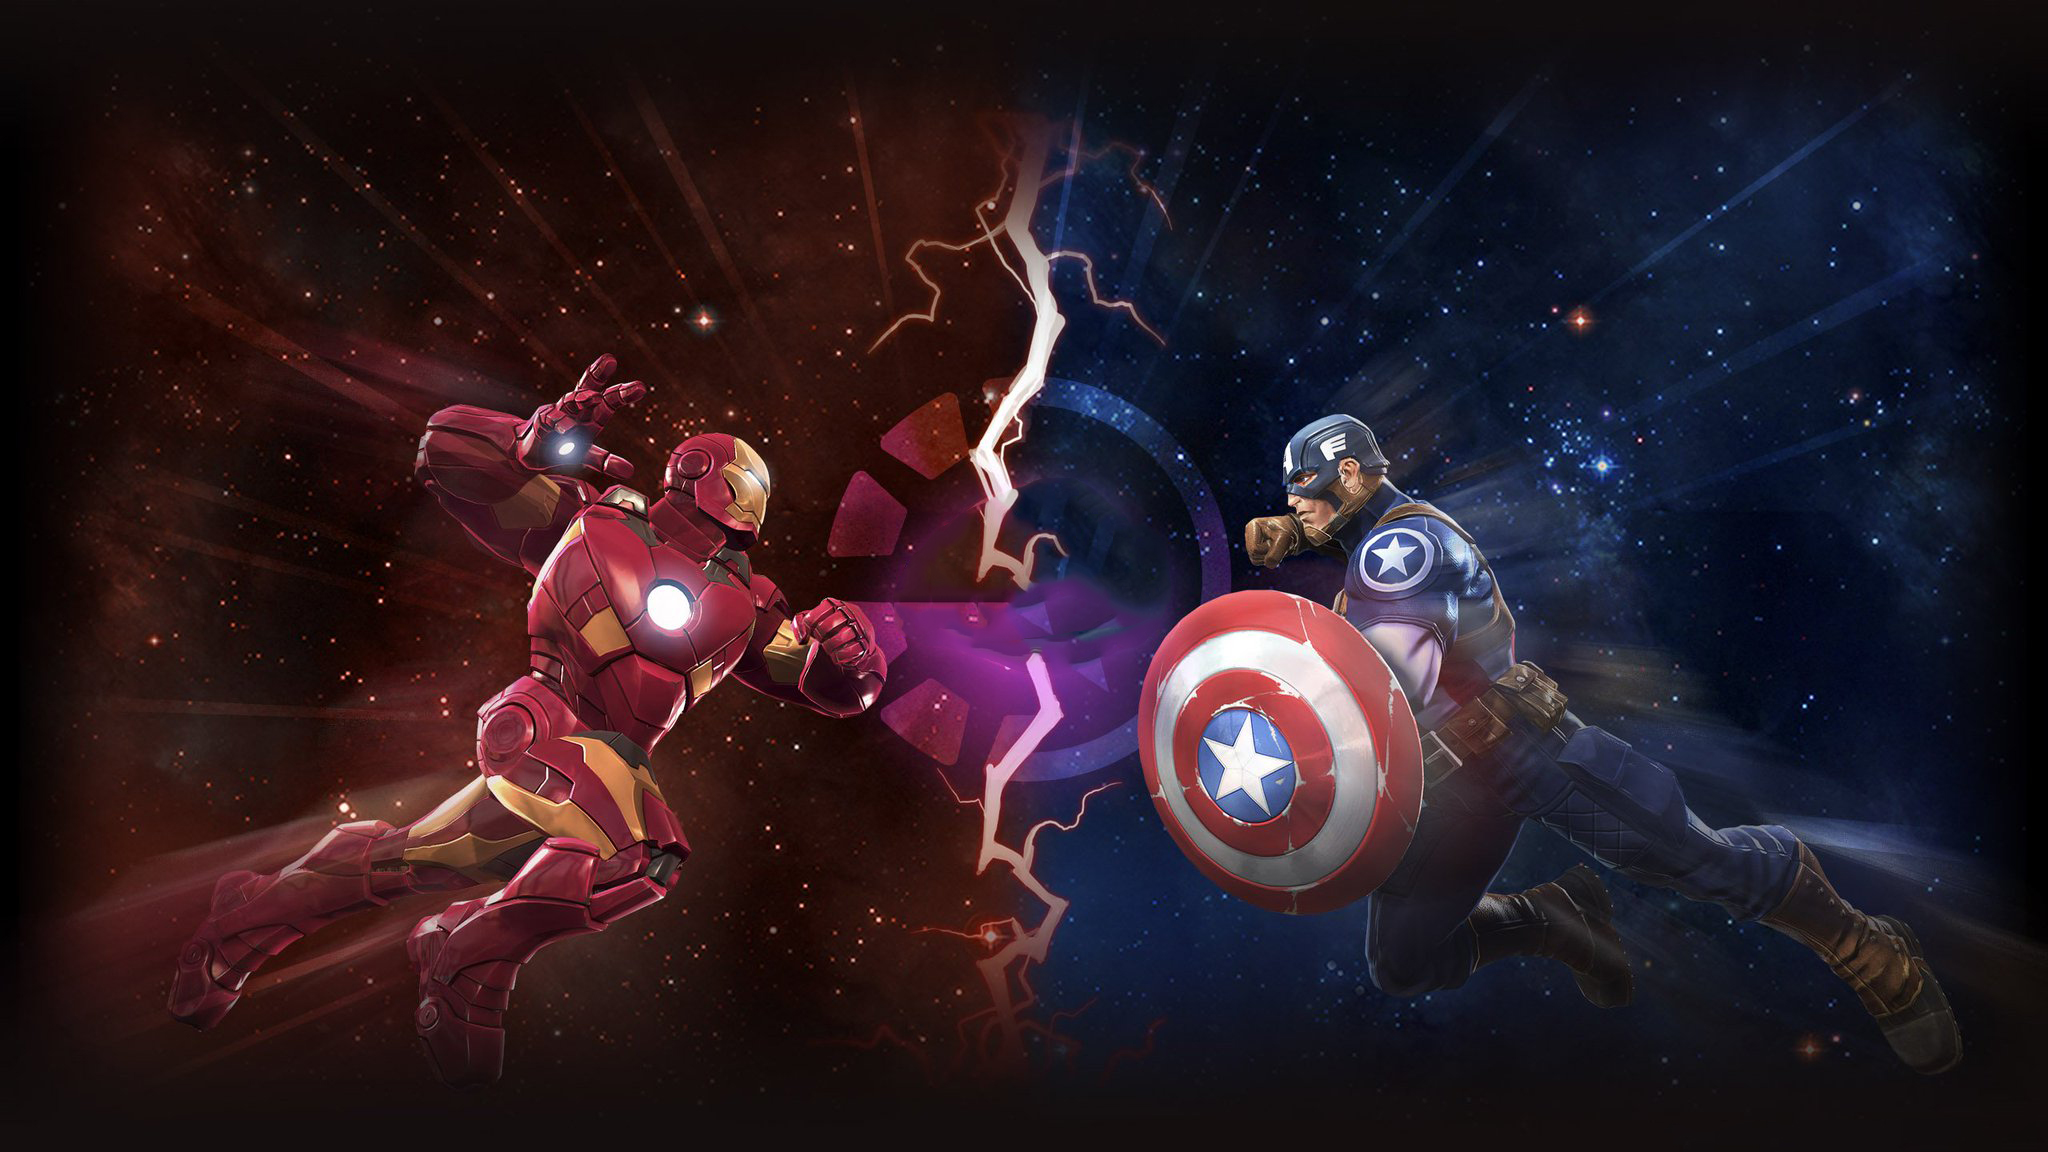 Iron Man vs Captain America Artwork Wallpapers